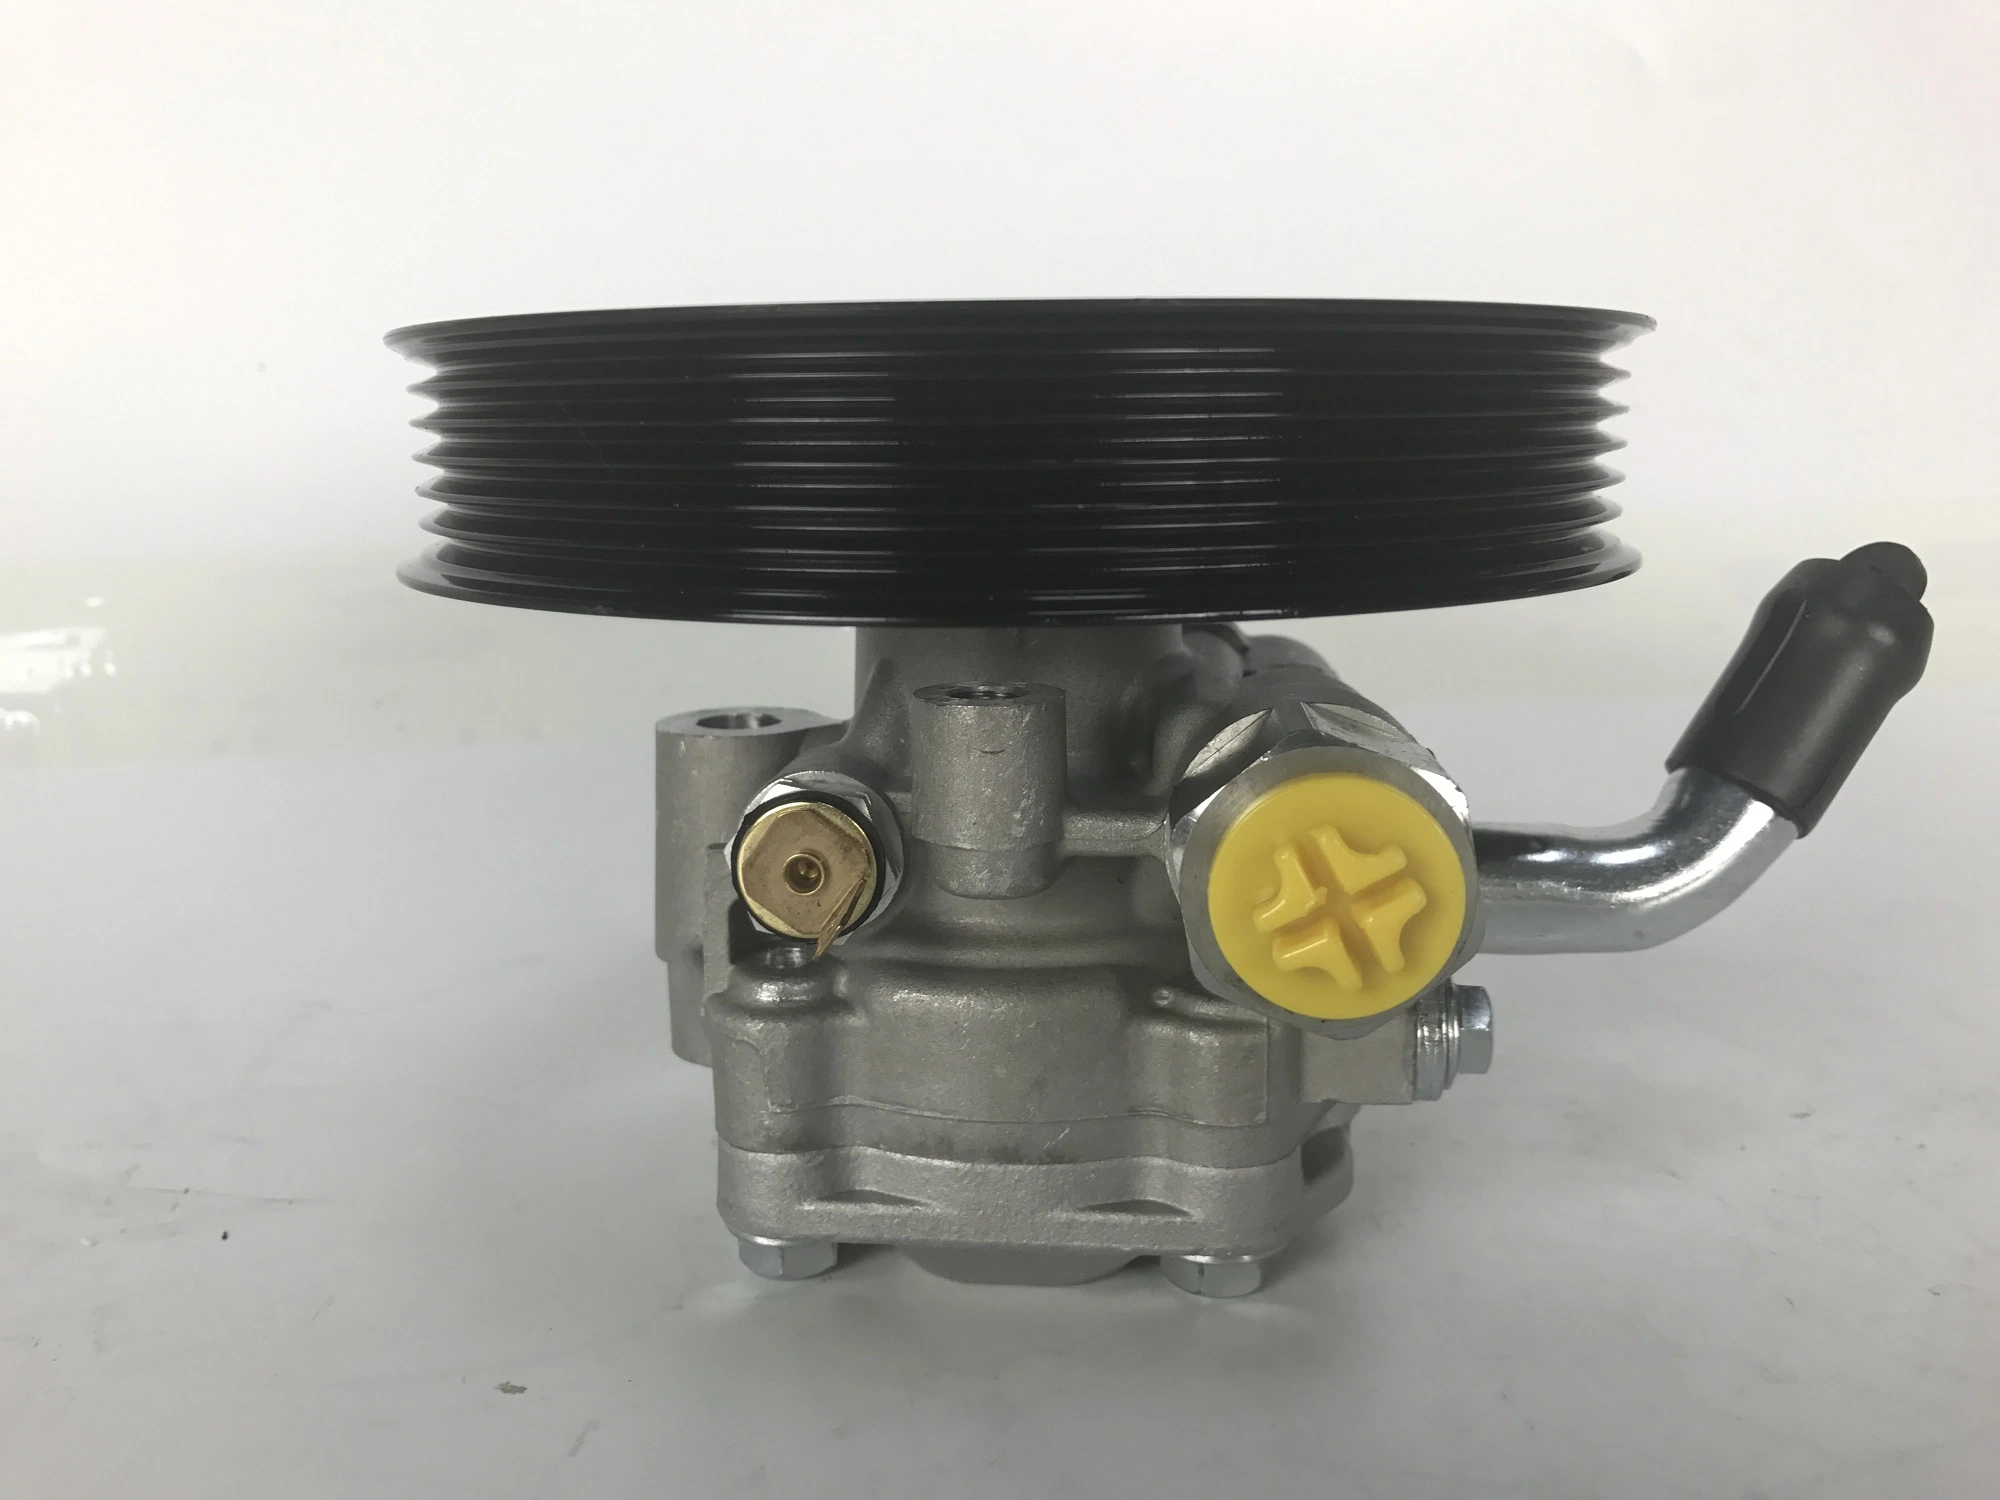 Power Steering Pump for Triton L200 Mr992871